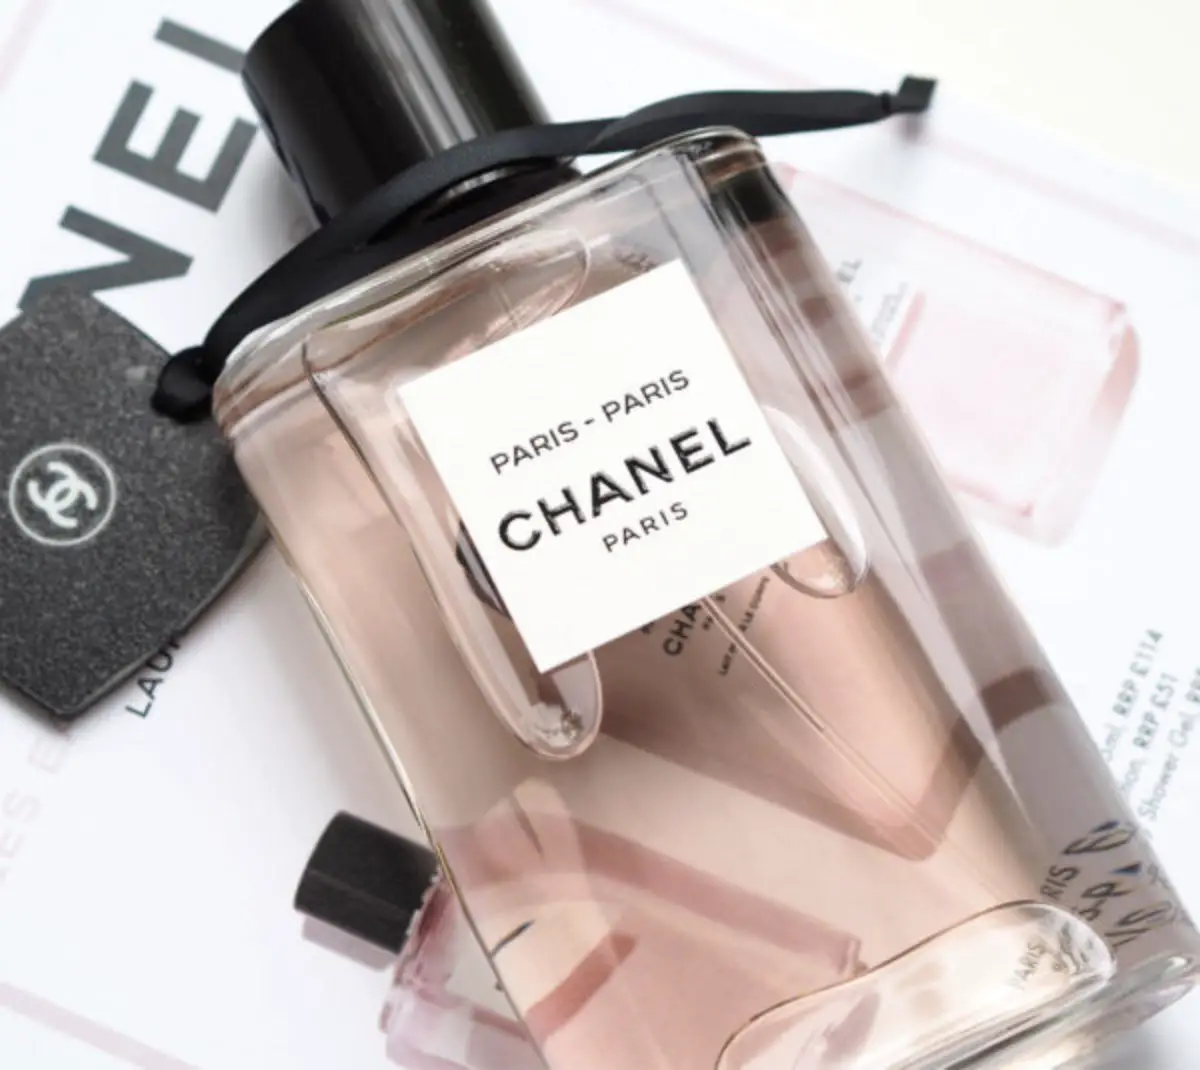 I Prefer Paris: Chanel Chance Perfume Metro Ads